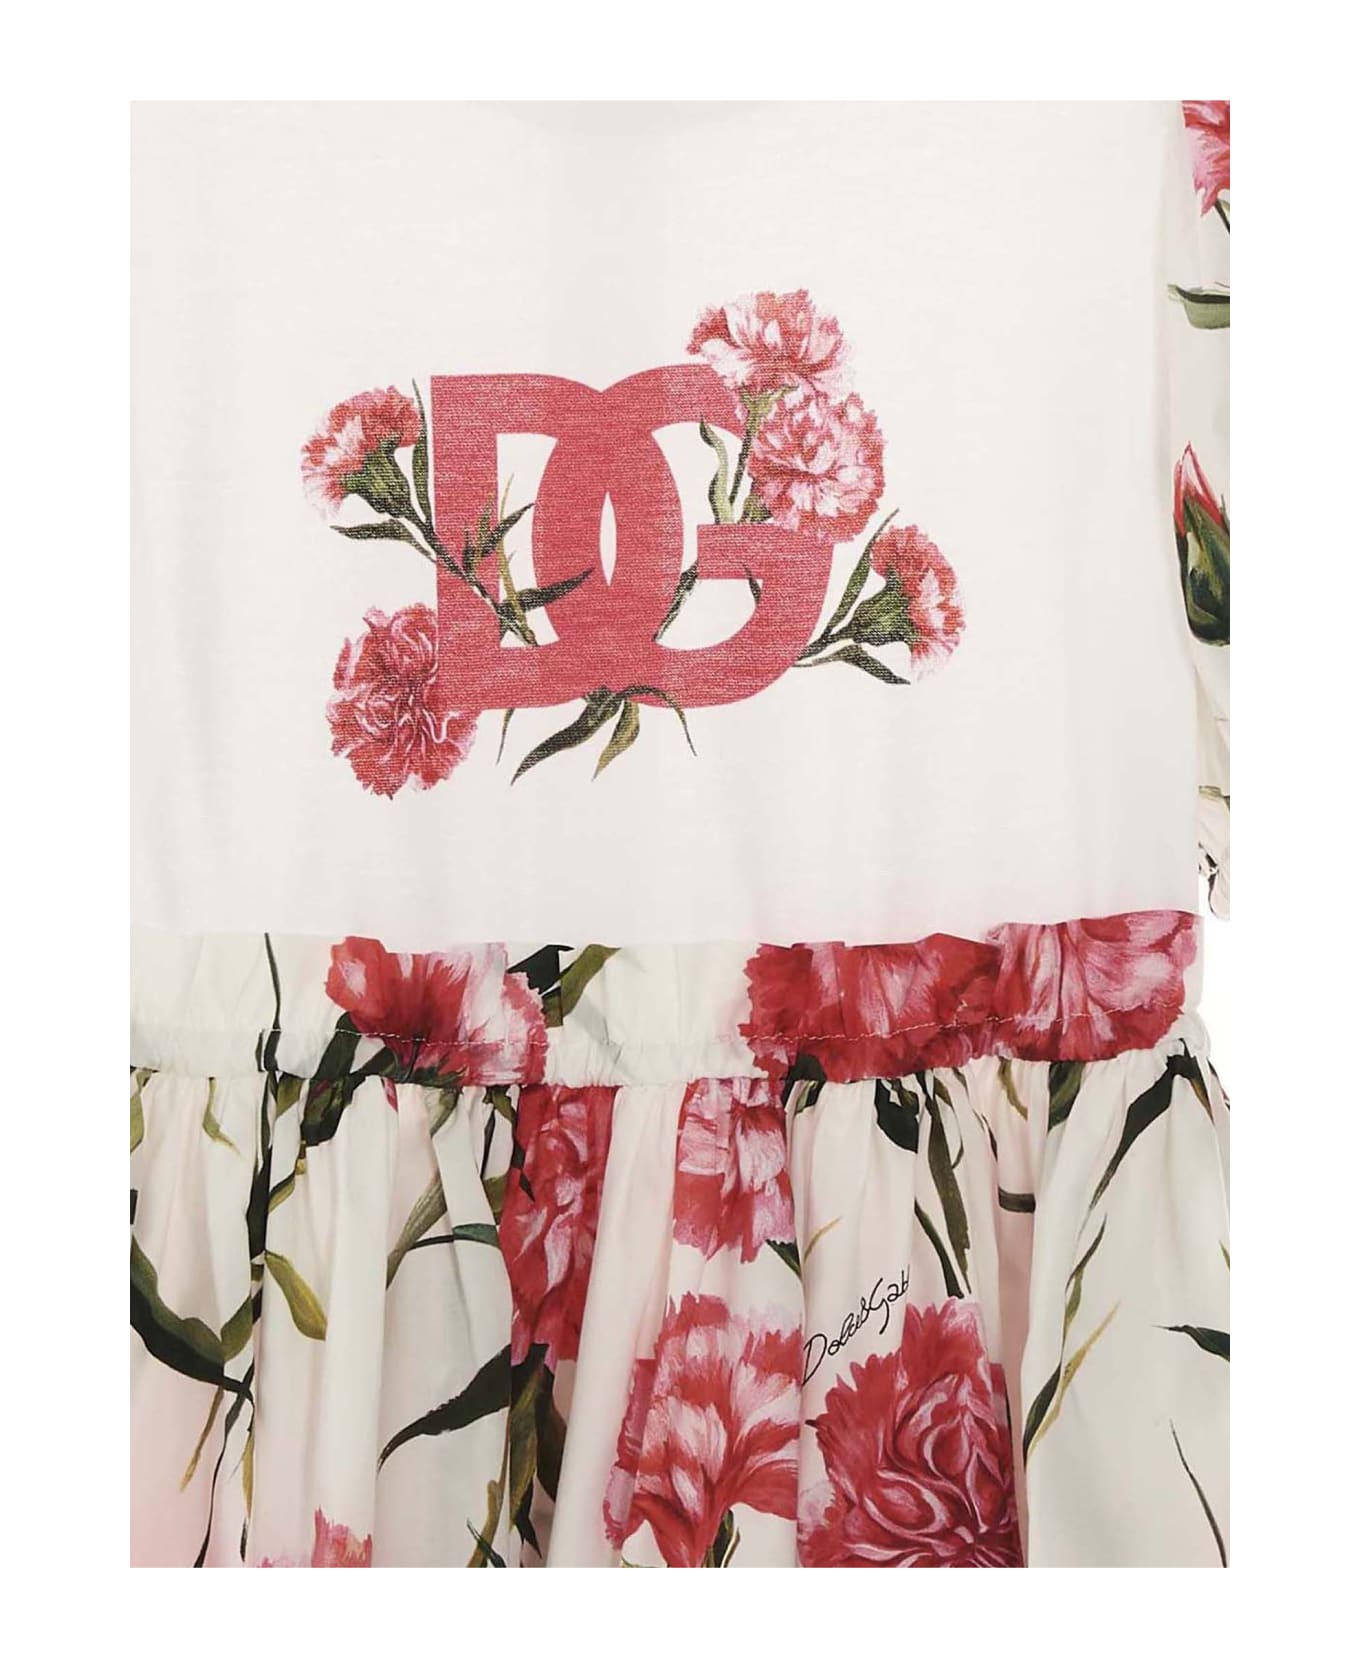 Dolce & Gabbana 'happy Garden' Dress - Bianco